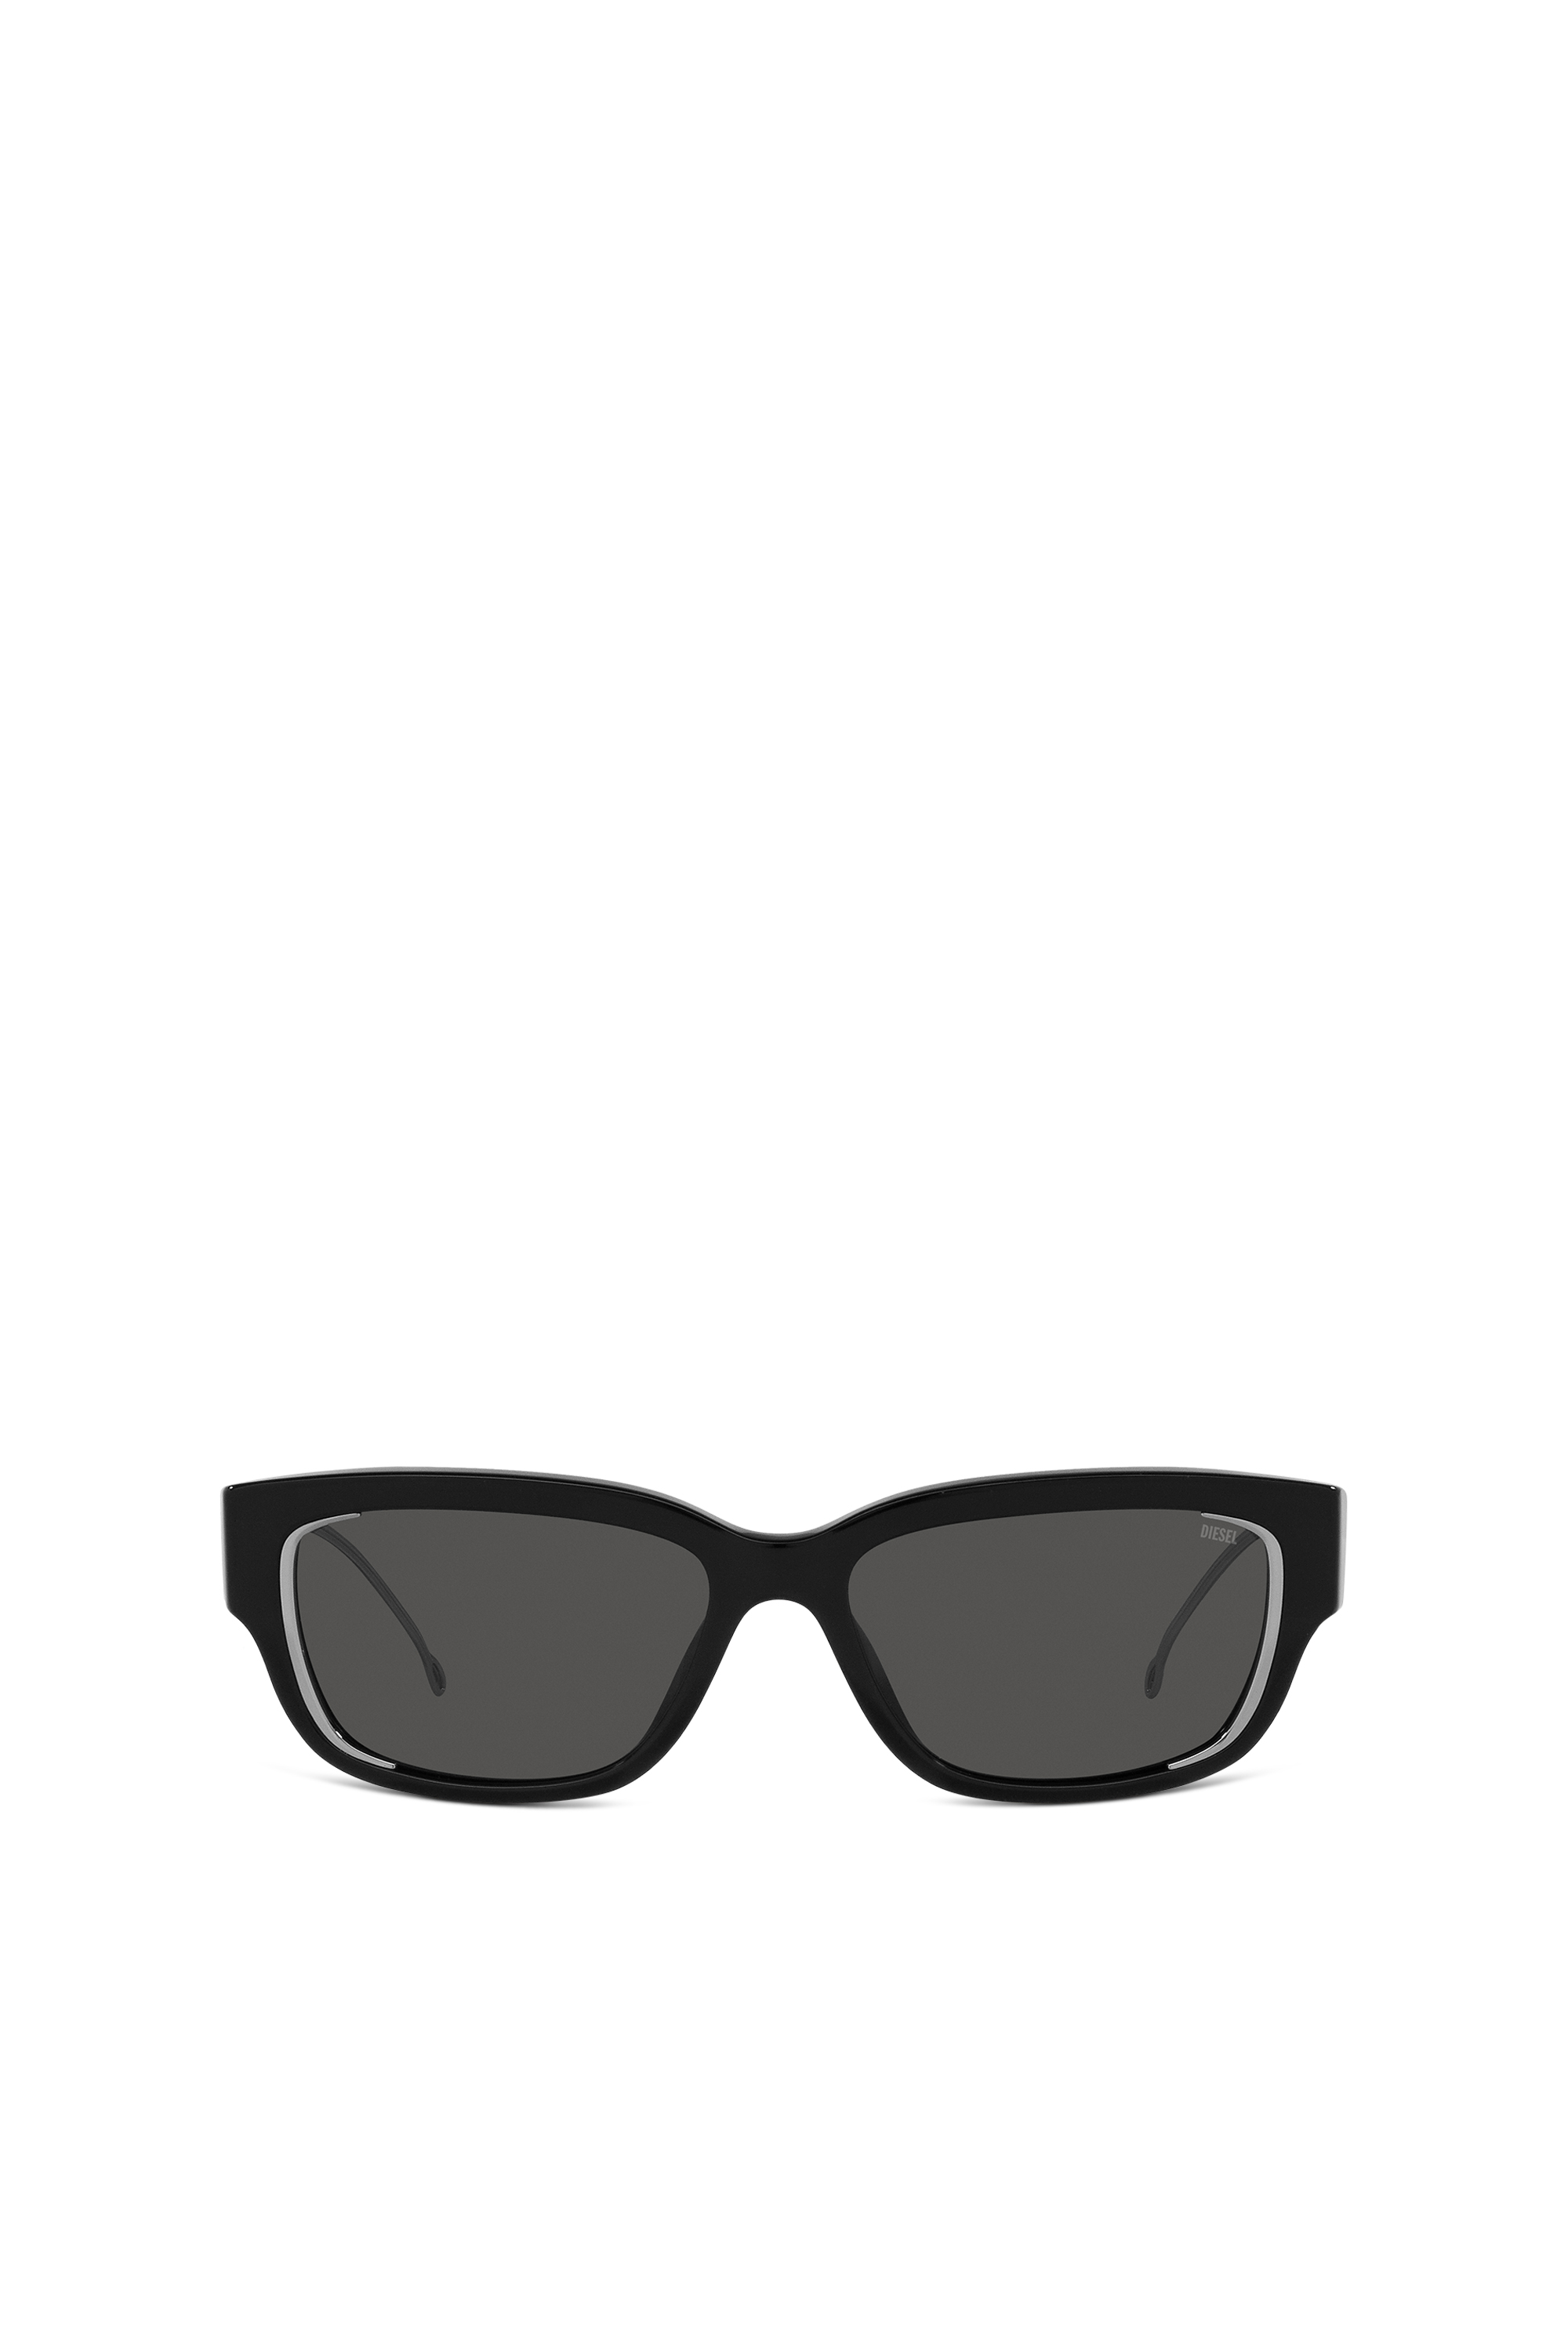 Diesel - Everyday style sunglasses - Sunglasses - Unisex - Black